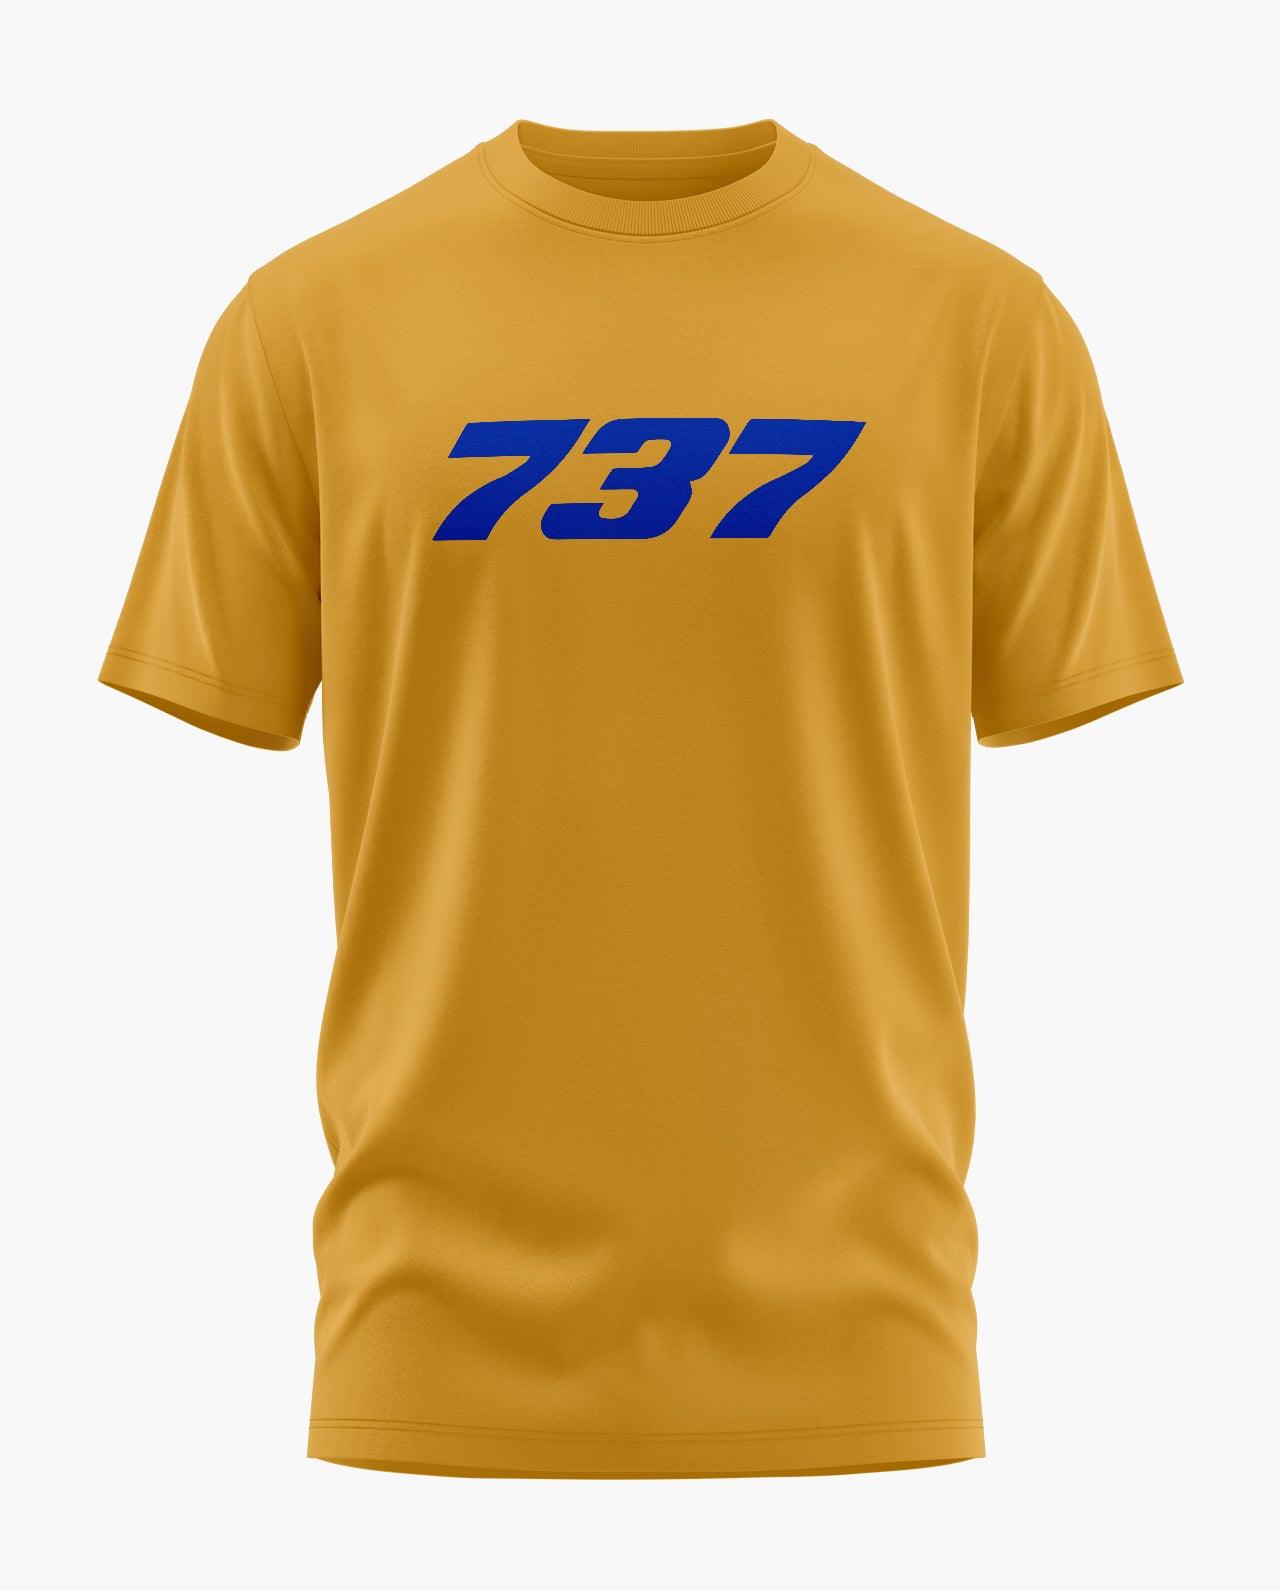 Boeing 737 Pilot T-Shirt - Aero Armour